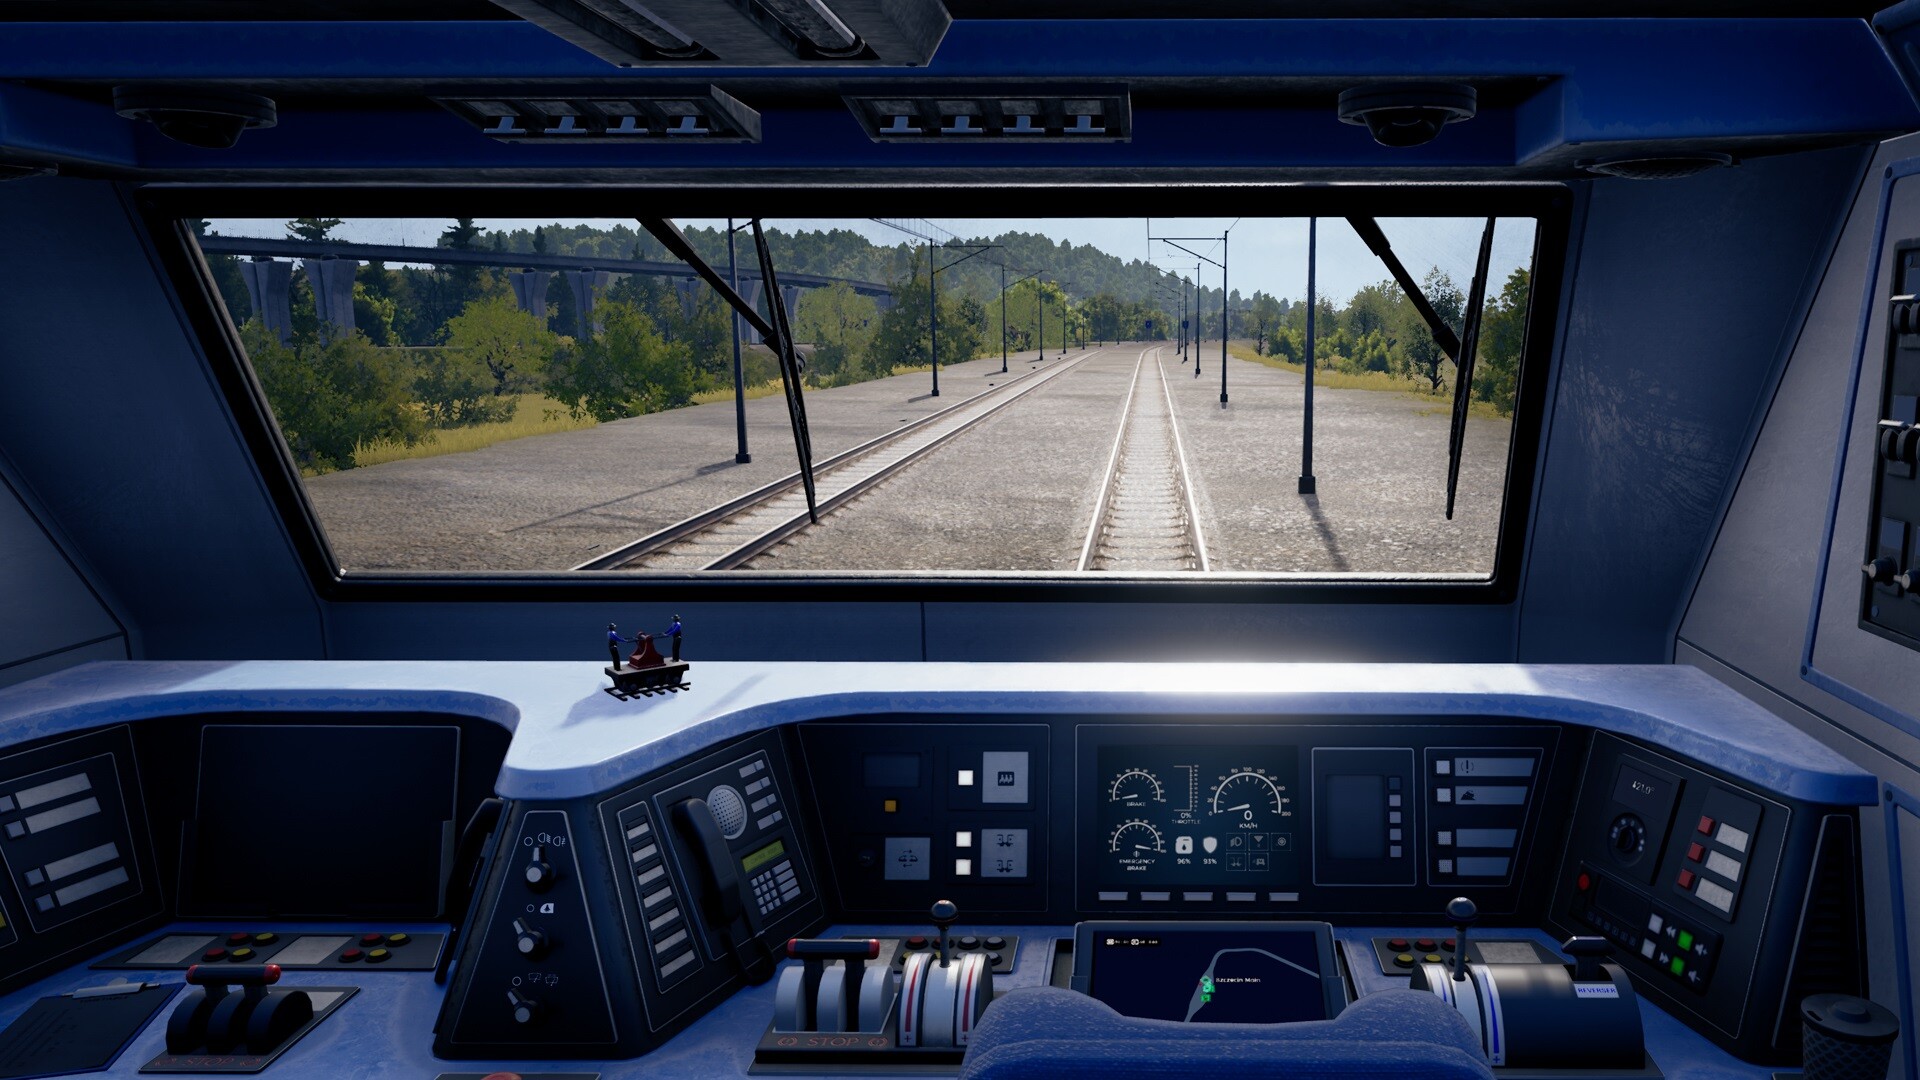 Train Life: A Railway Simulator - Supporter Pack DLC Steam CD Key, $1.63